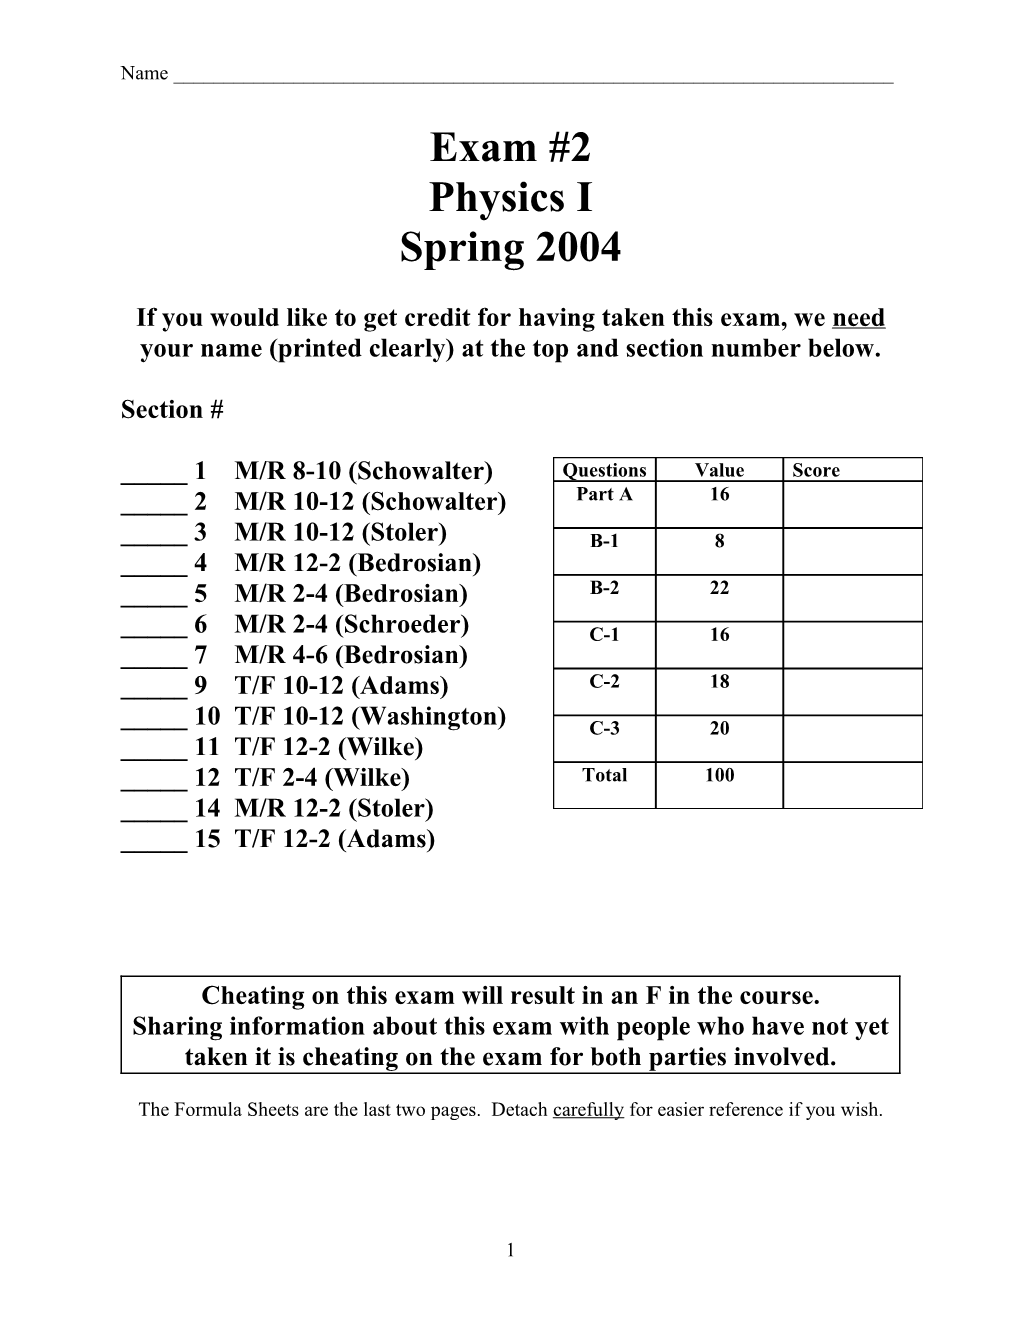 Physics I Exam 3 Spring 2003 s1